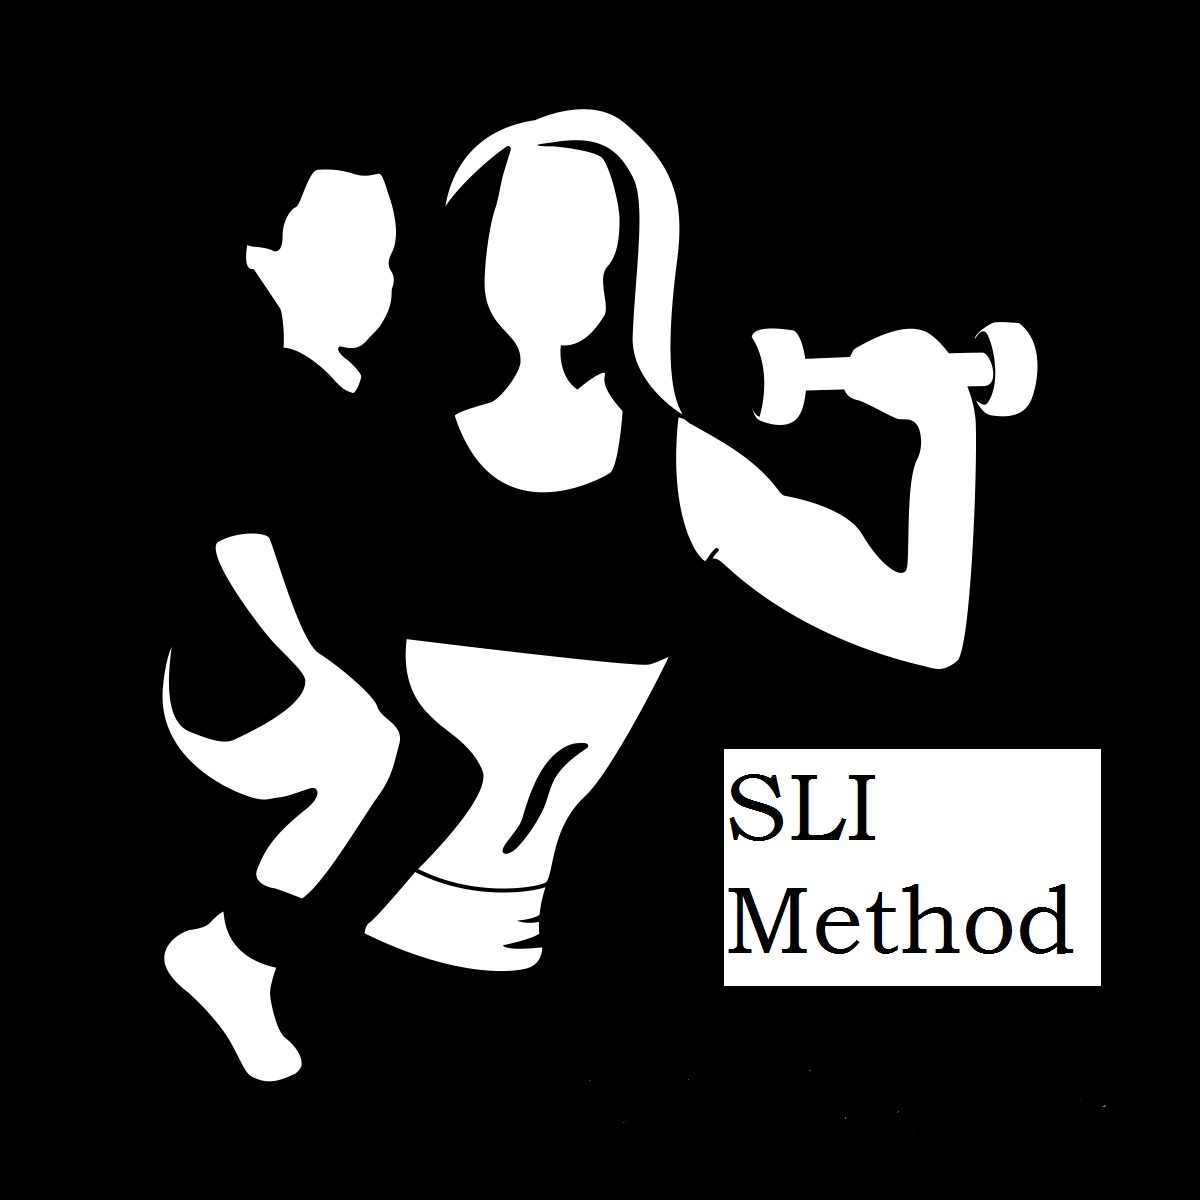 SLI Method 31 Day Challenge